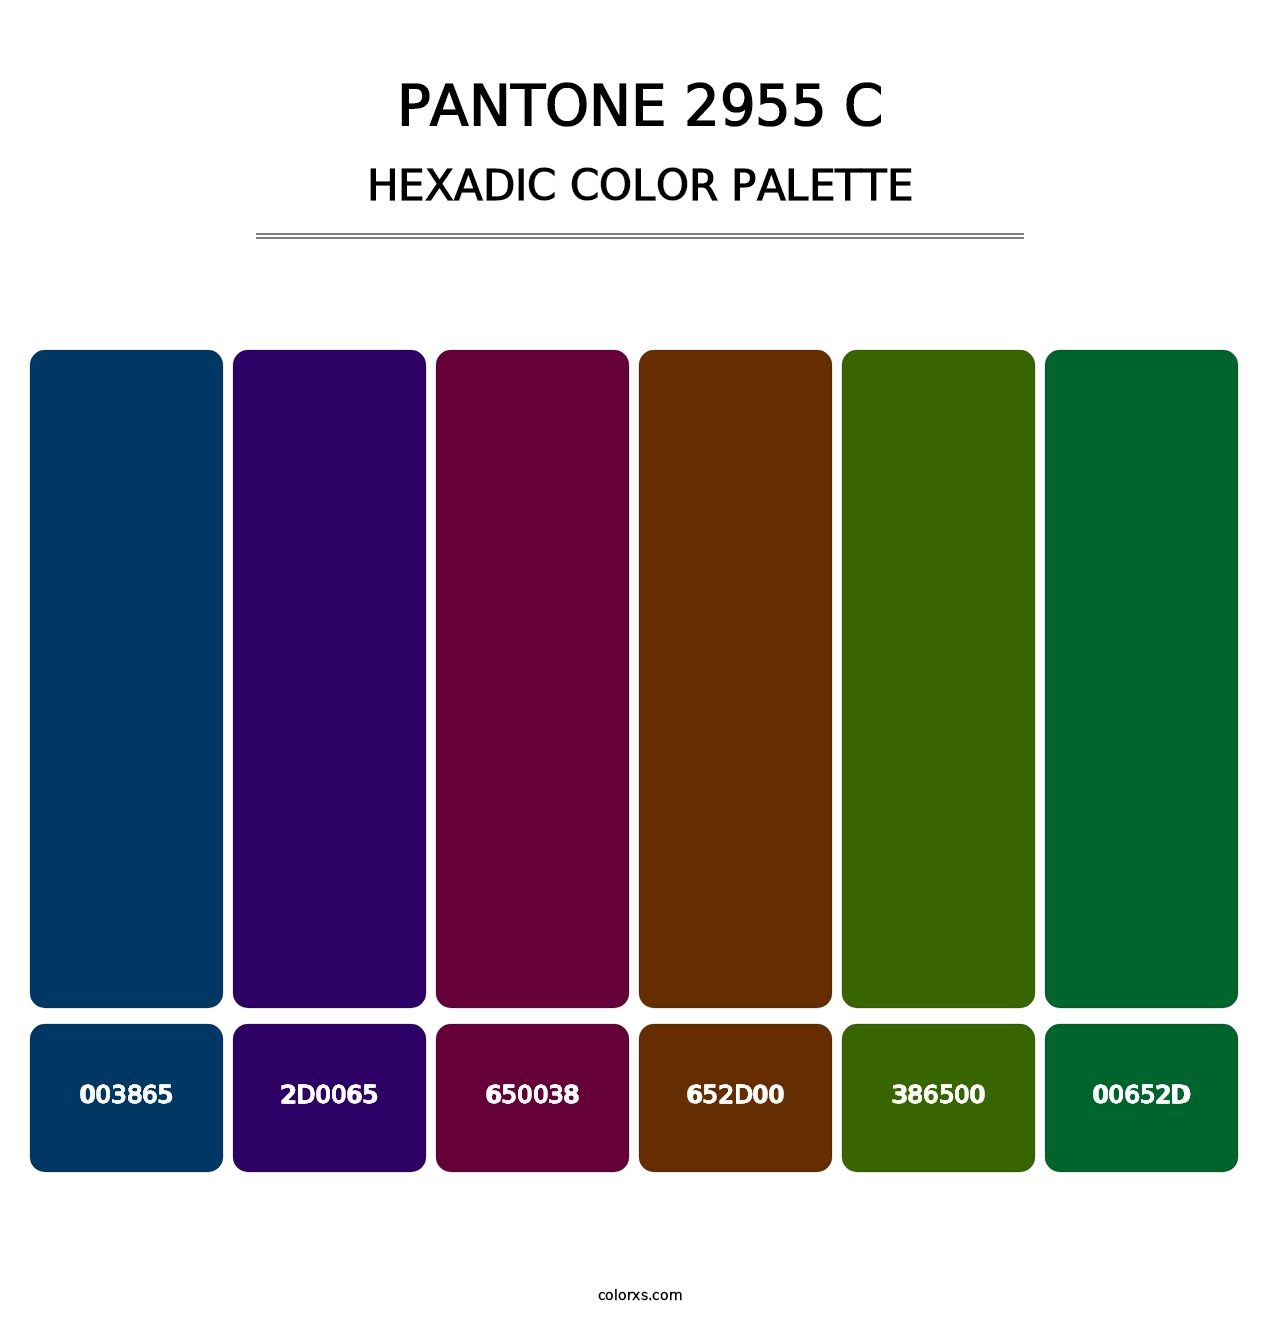 PANTONE 2955 C - Hexadic Color Palette